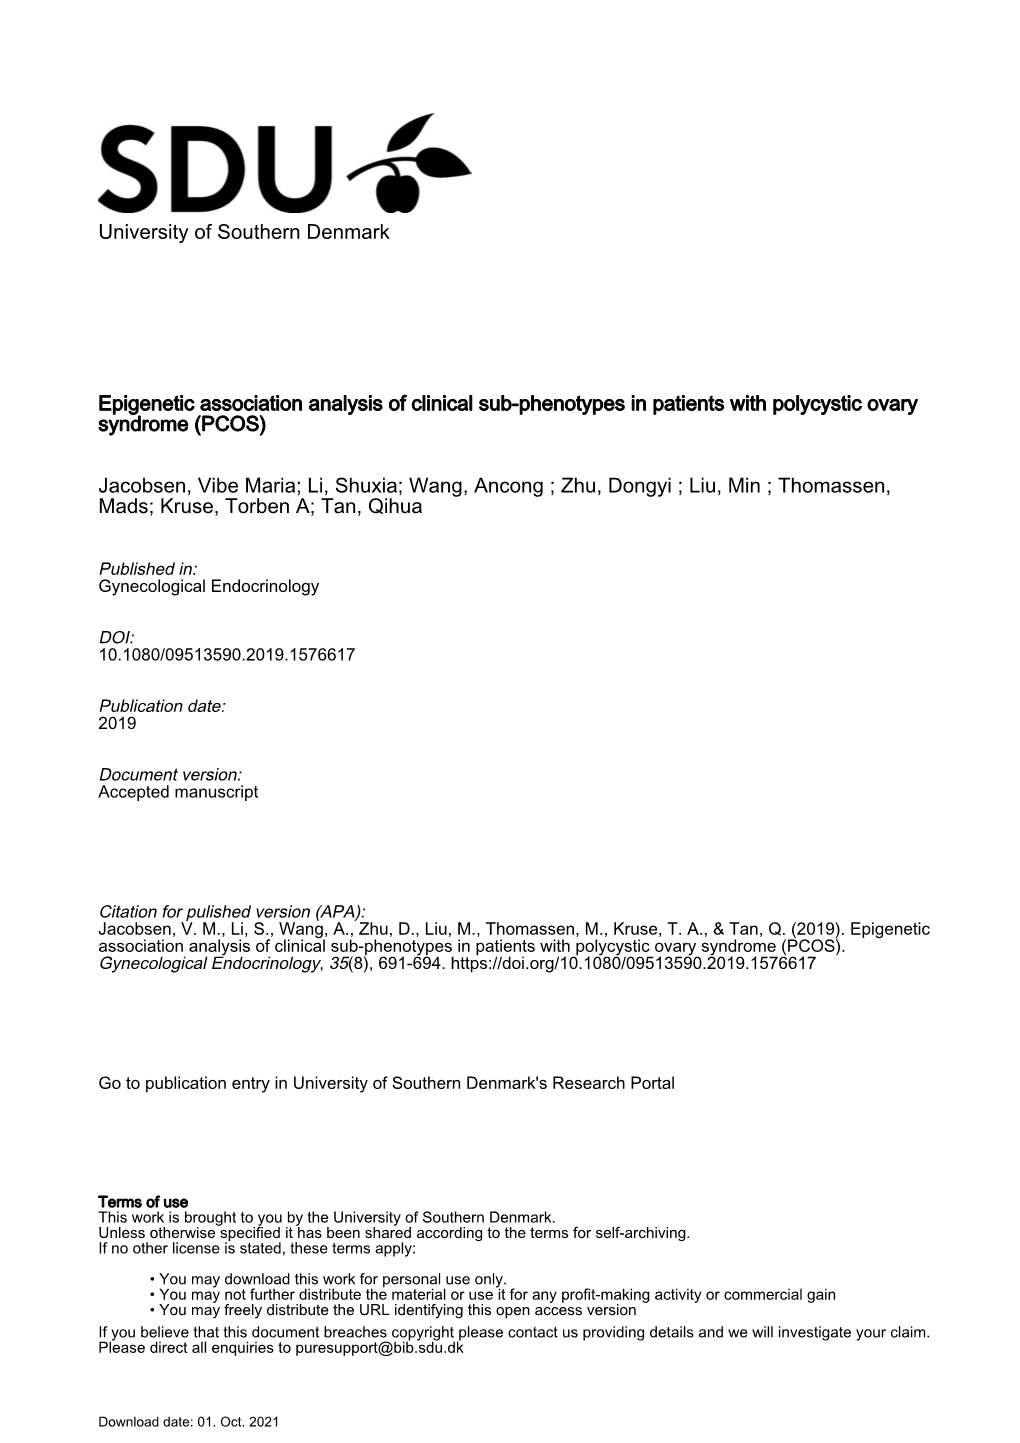 University of Southern Denmark Epigenetic Association Analysis Of